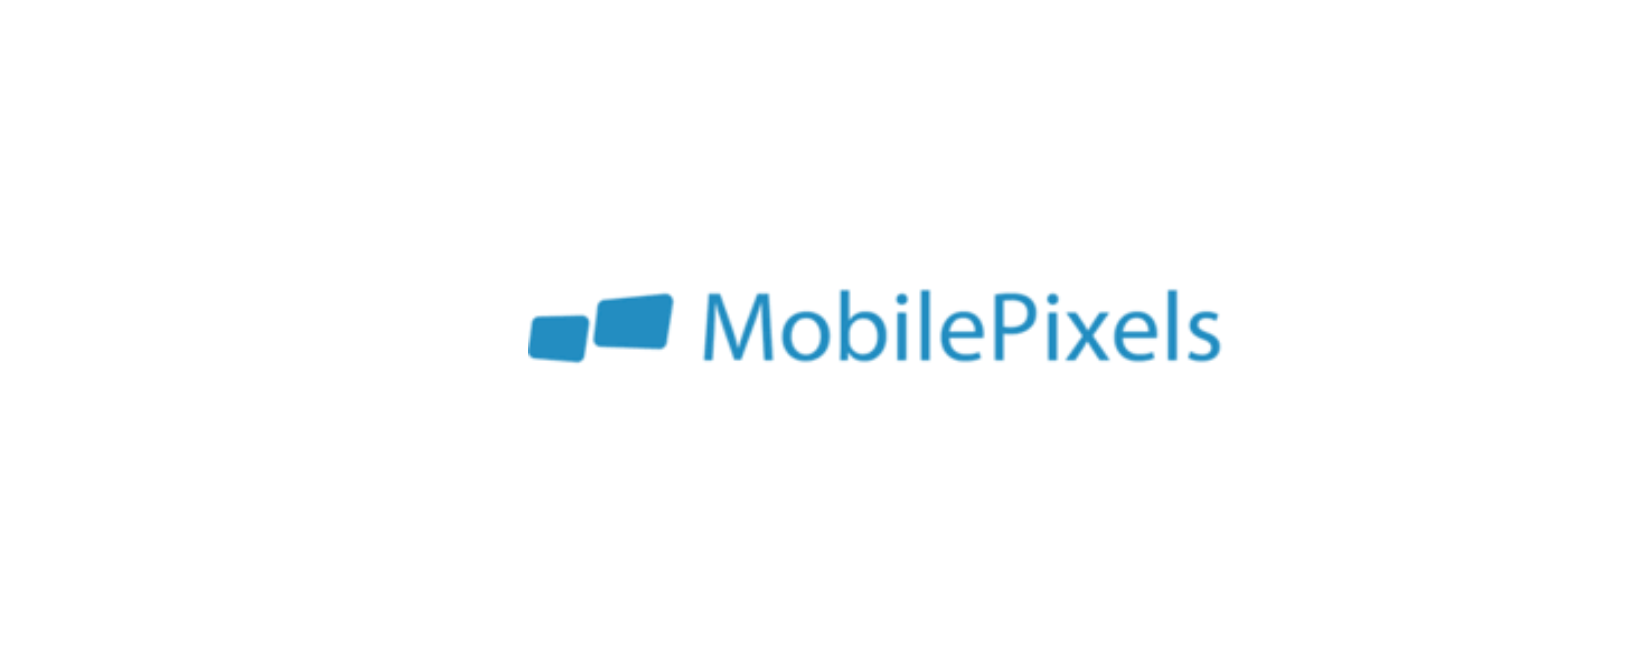 Mobile Pixels Discount Code 2022